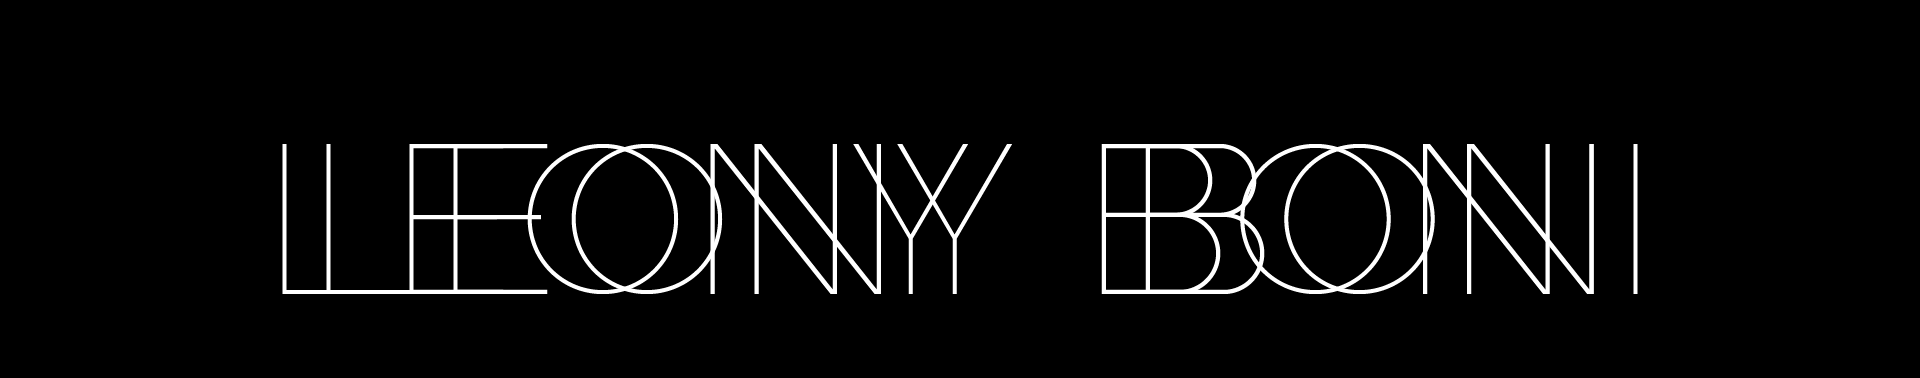 Leony Boni's profile banner